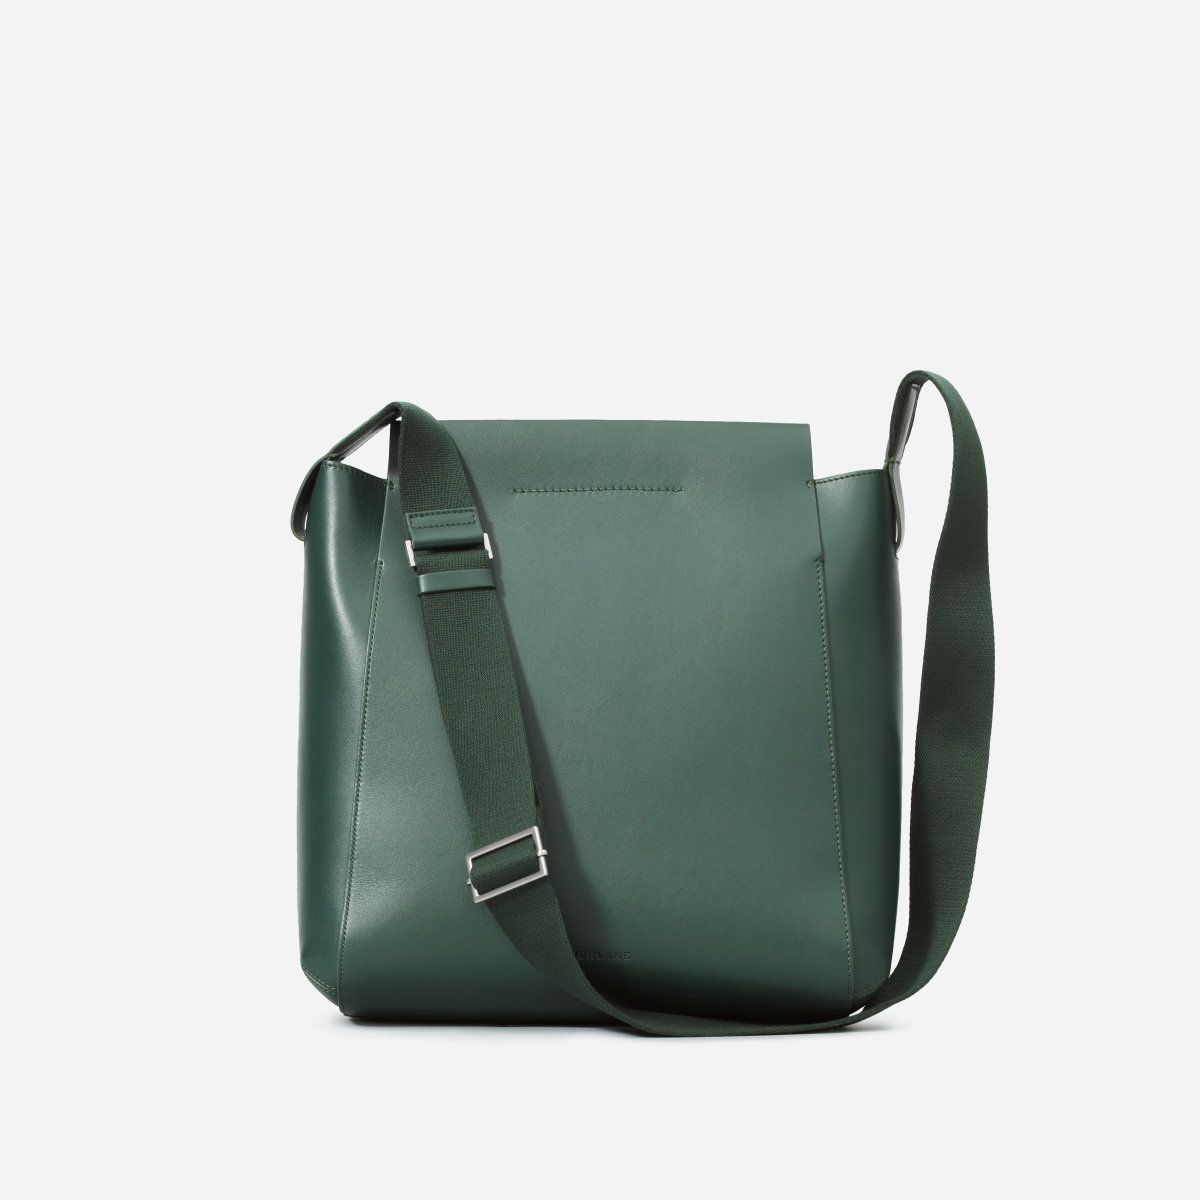 Bolso 'Form bag' de Everlane en color verde